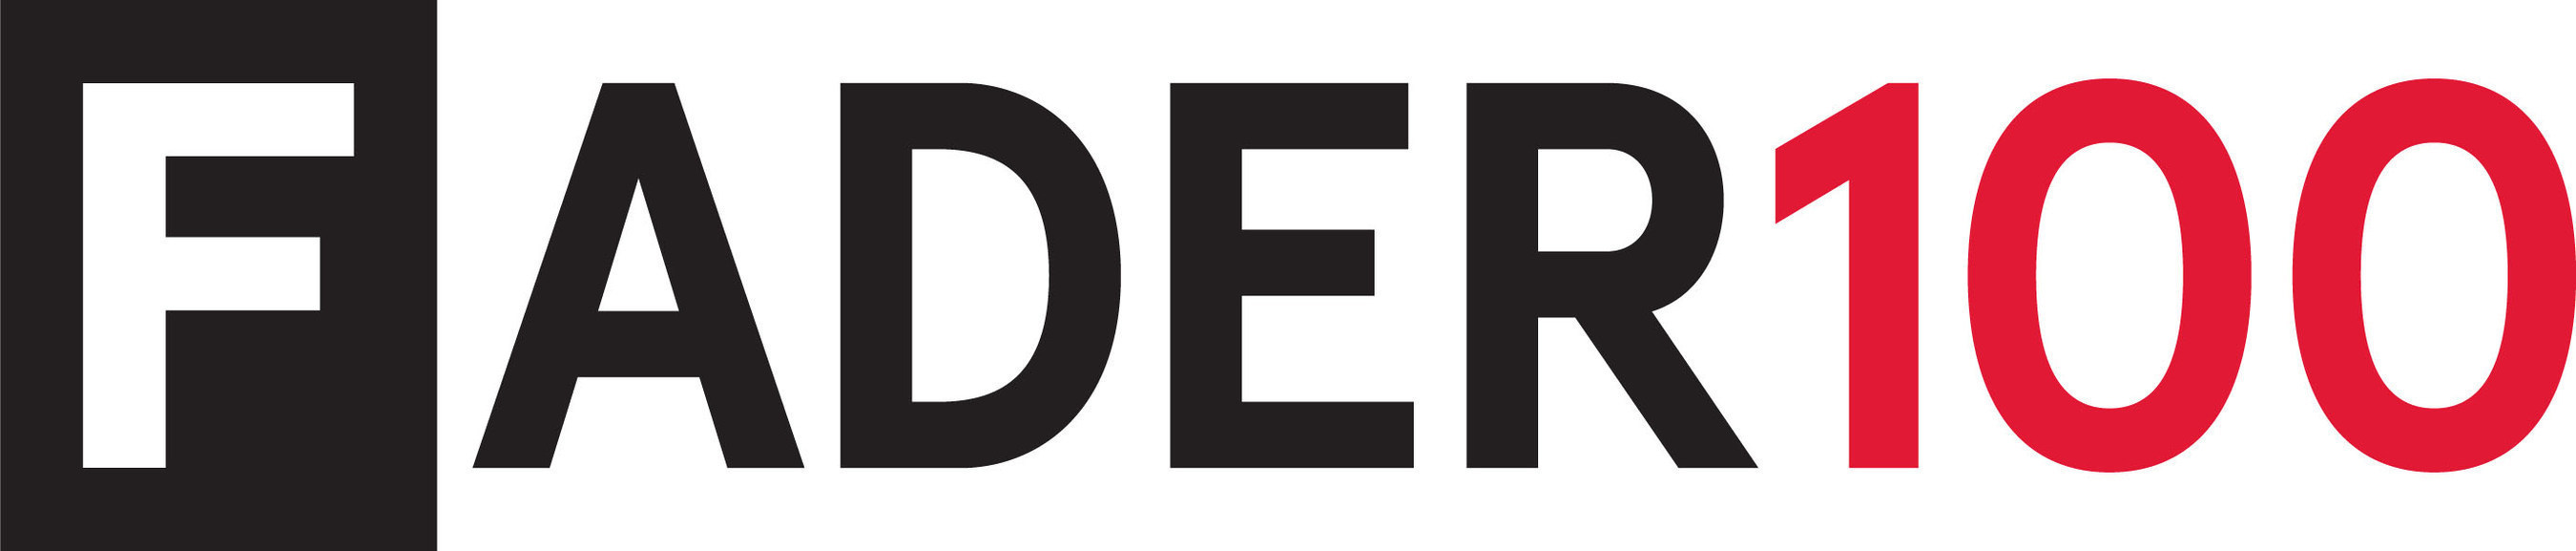 The FADER 100 logo